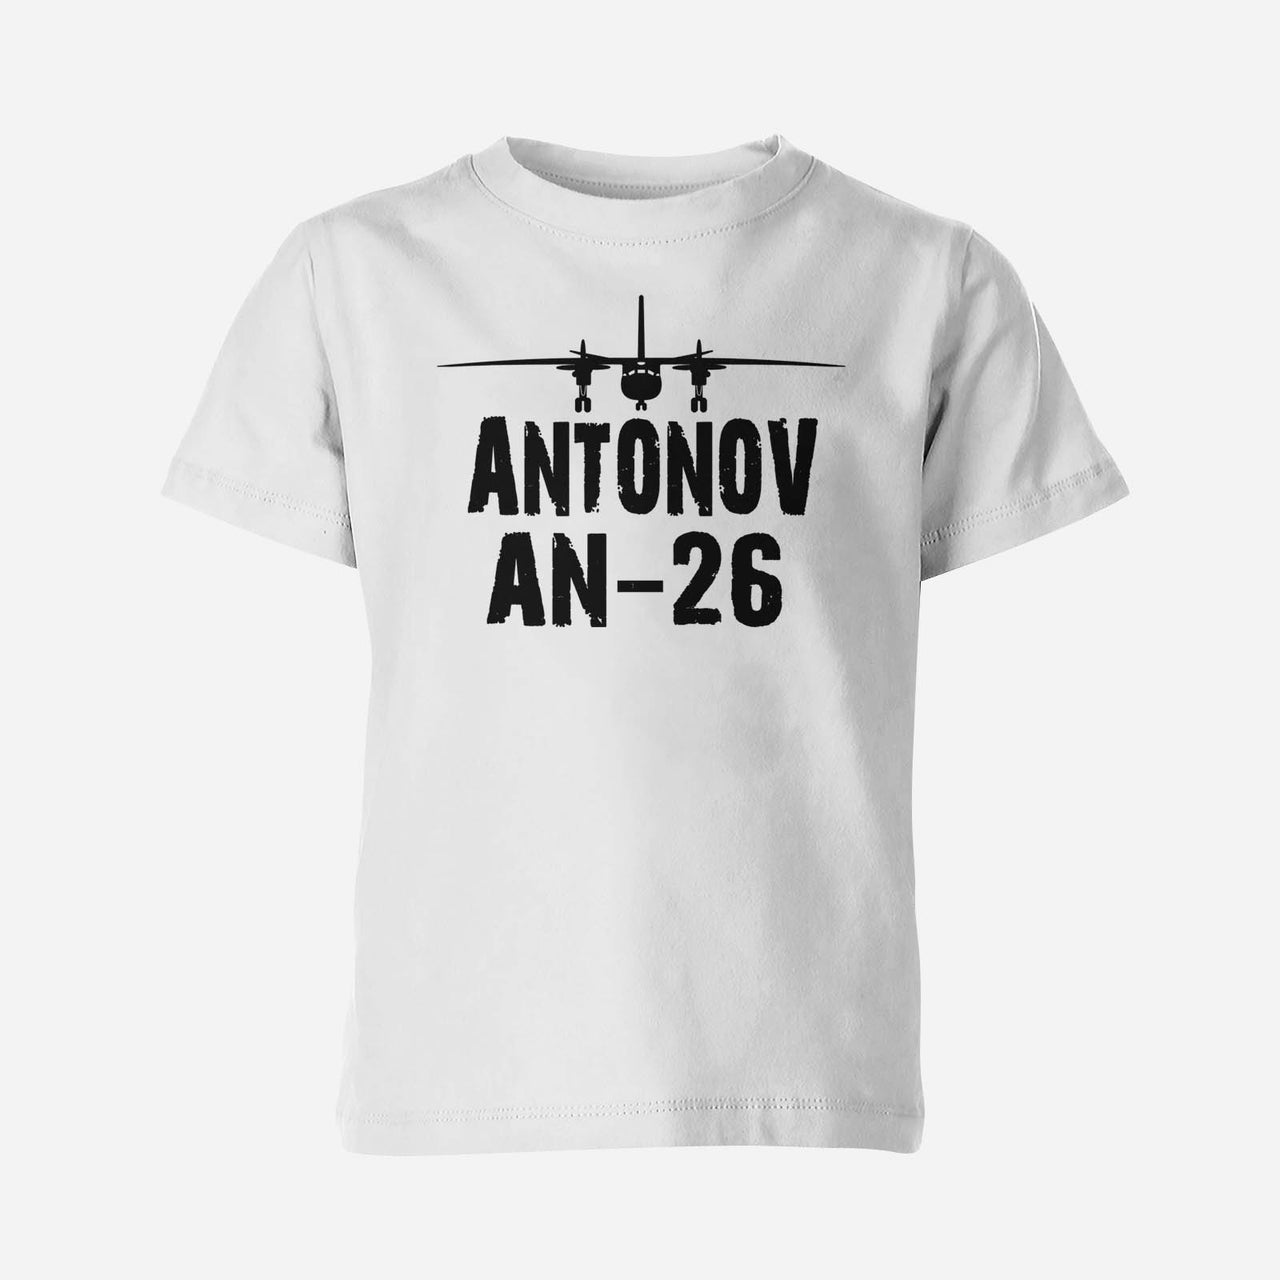 Antonov AN-26 & Plane Designed Children T-Shirts